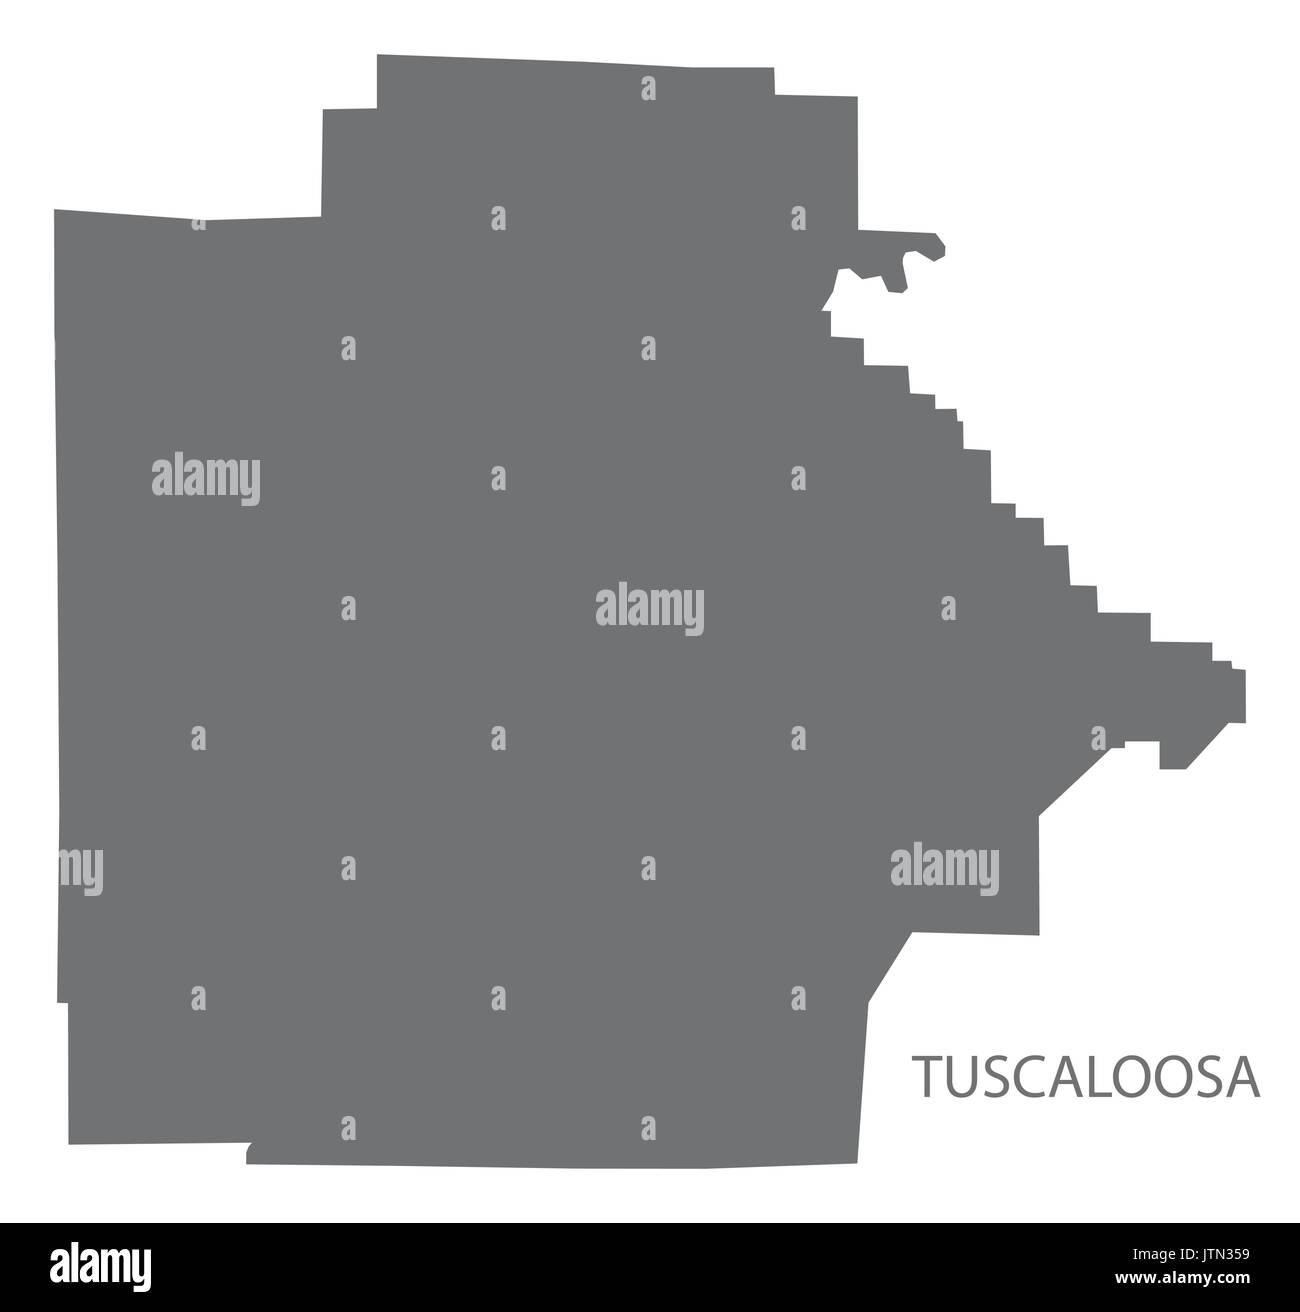 Tuscaloosa county map of Alabama USA grey illustration silhouette Stock Vector